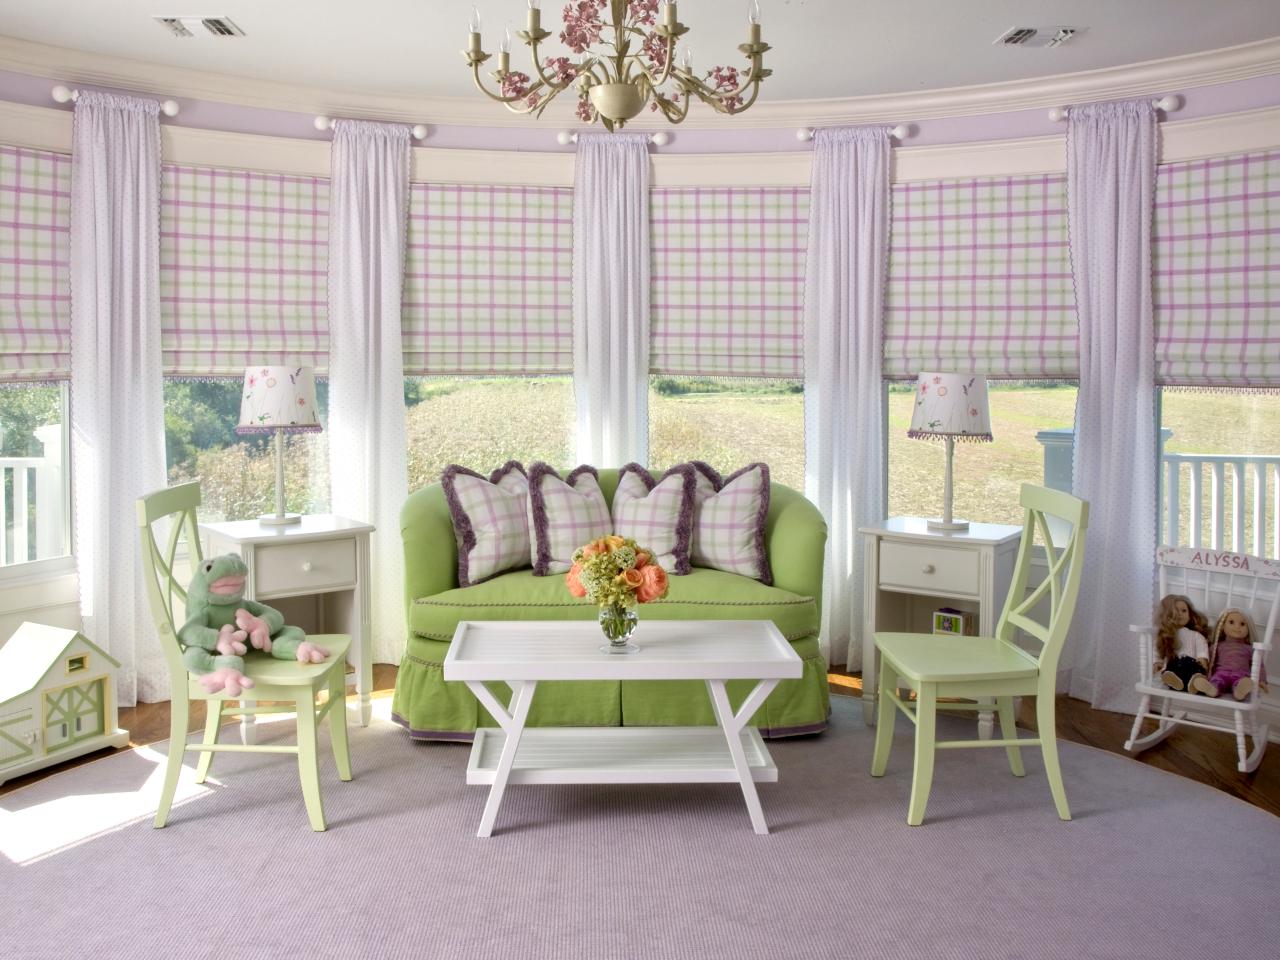 5 Lavender Home Decorating Ideas